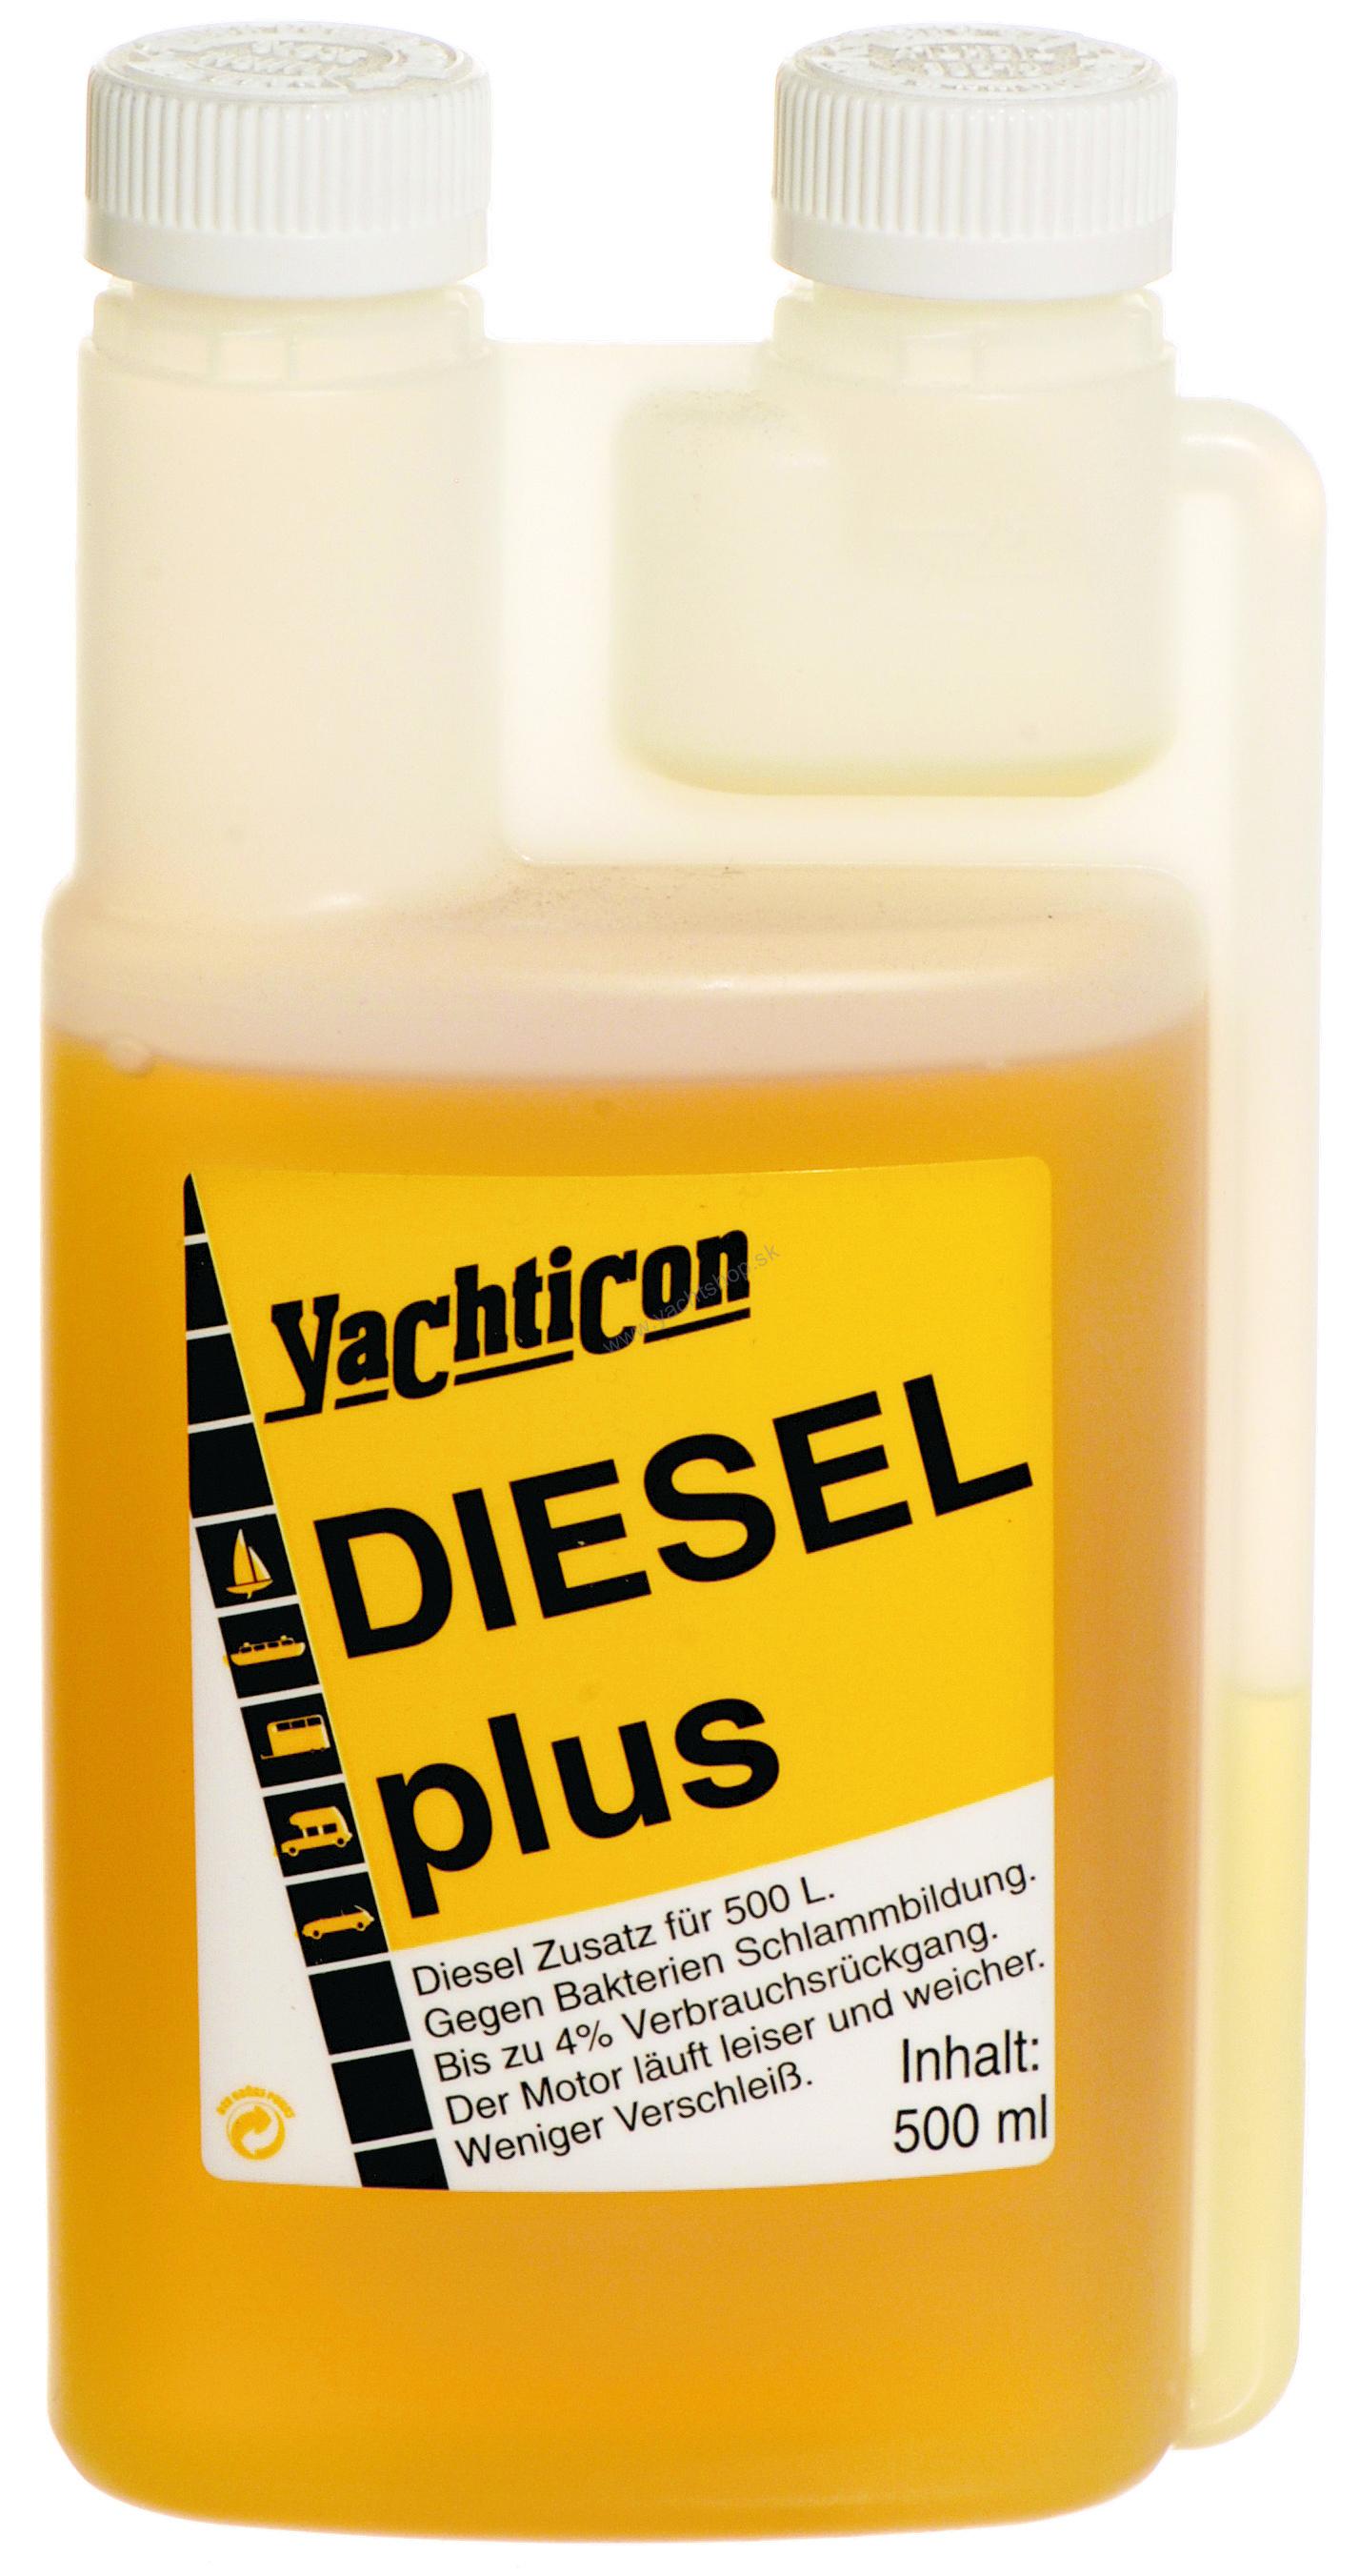 yachticon diesel plus 2.0